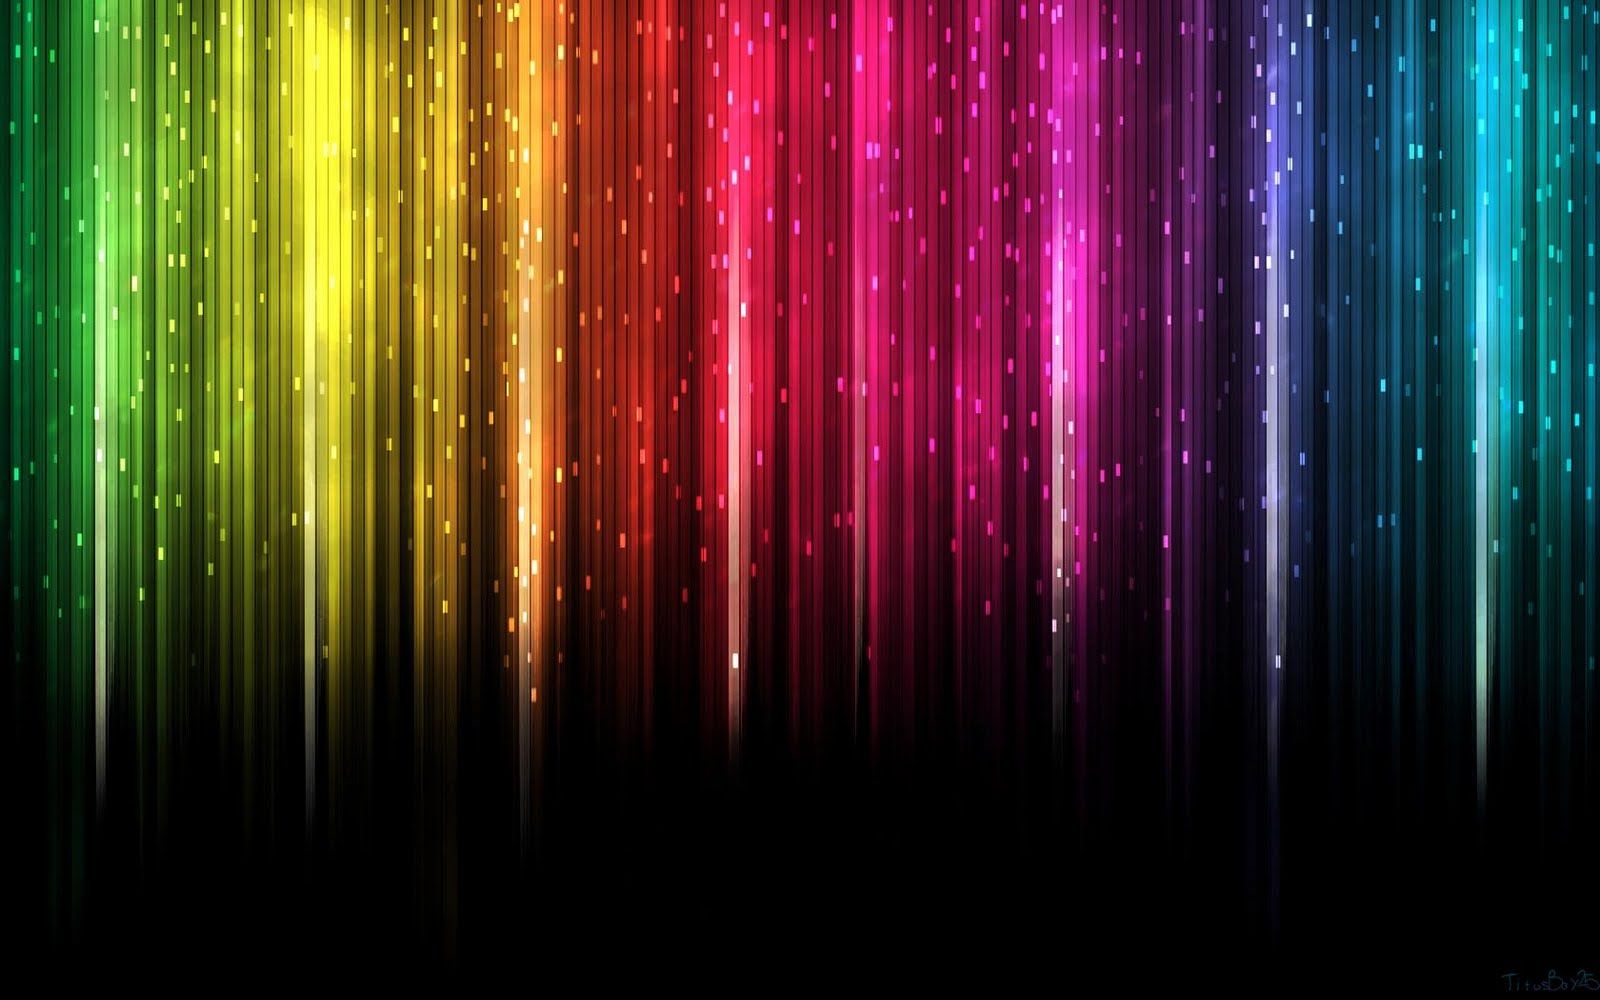 Download wallpaper: rainbow background, Rainbow, download photo, desktop wallpaper, rainbow wallpaper